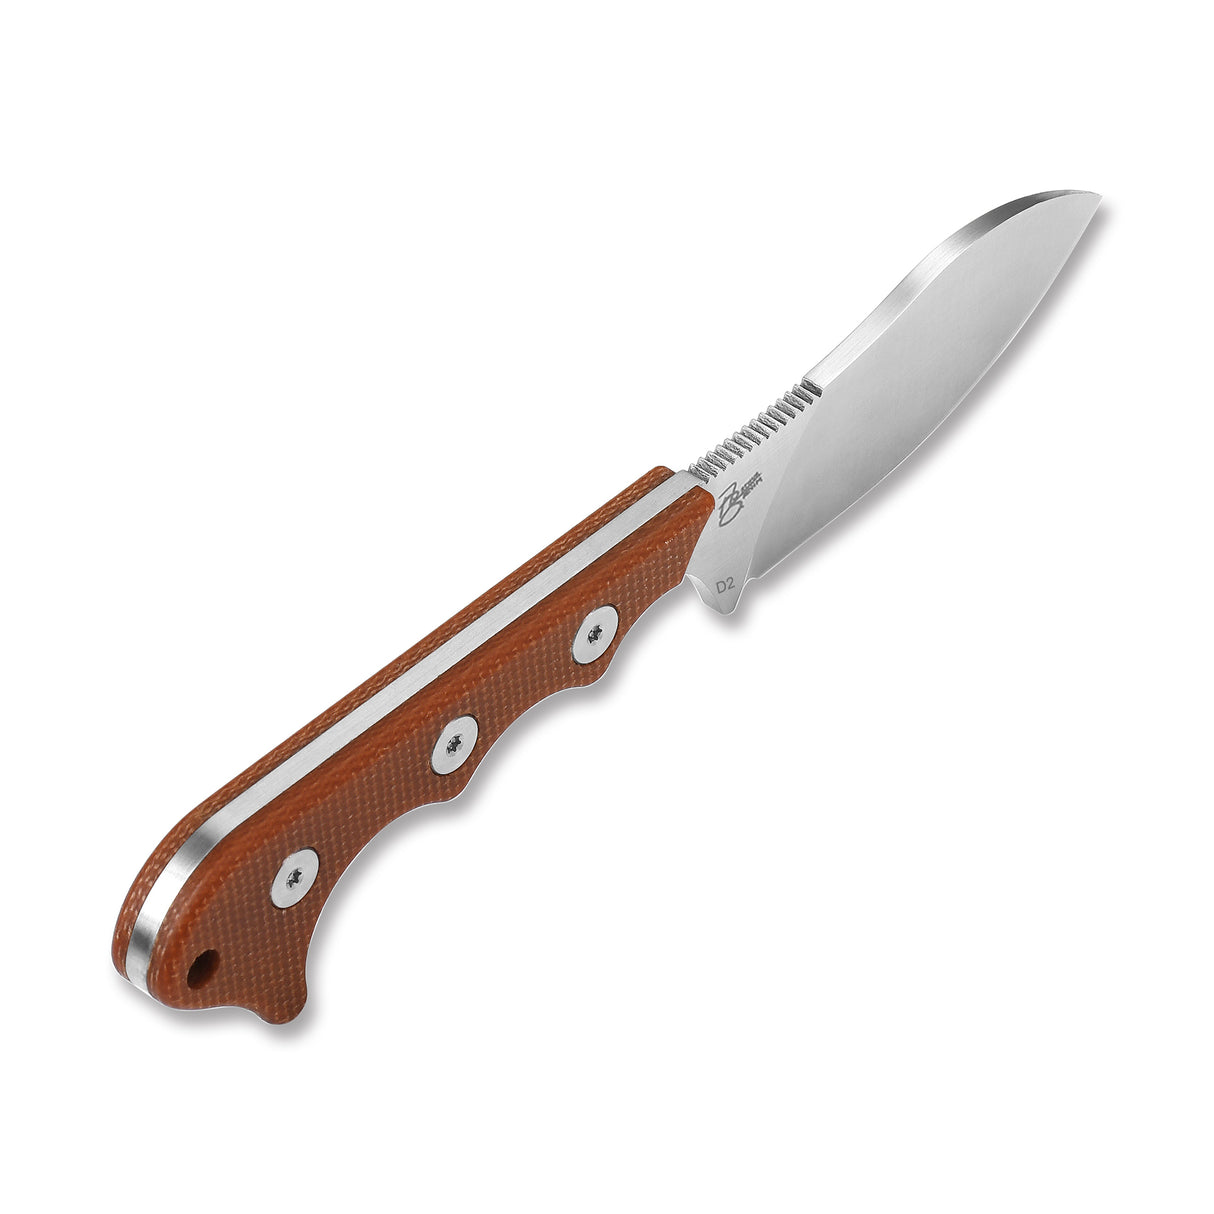 QSP Neckmuk Neck Knife D2 blade Micarta handle with Kydex sheath